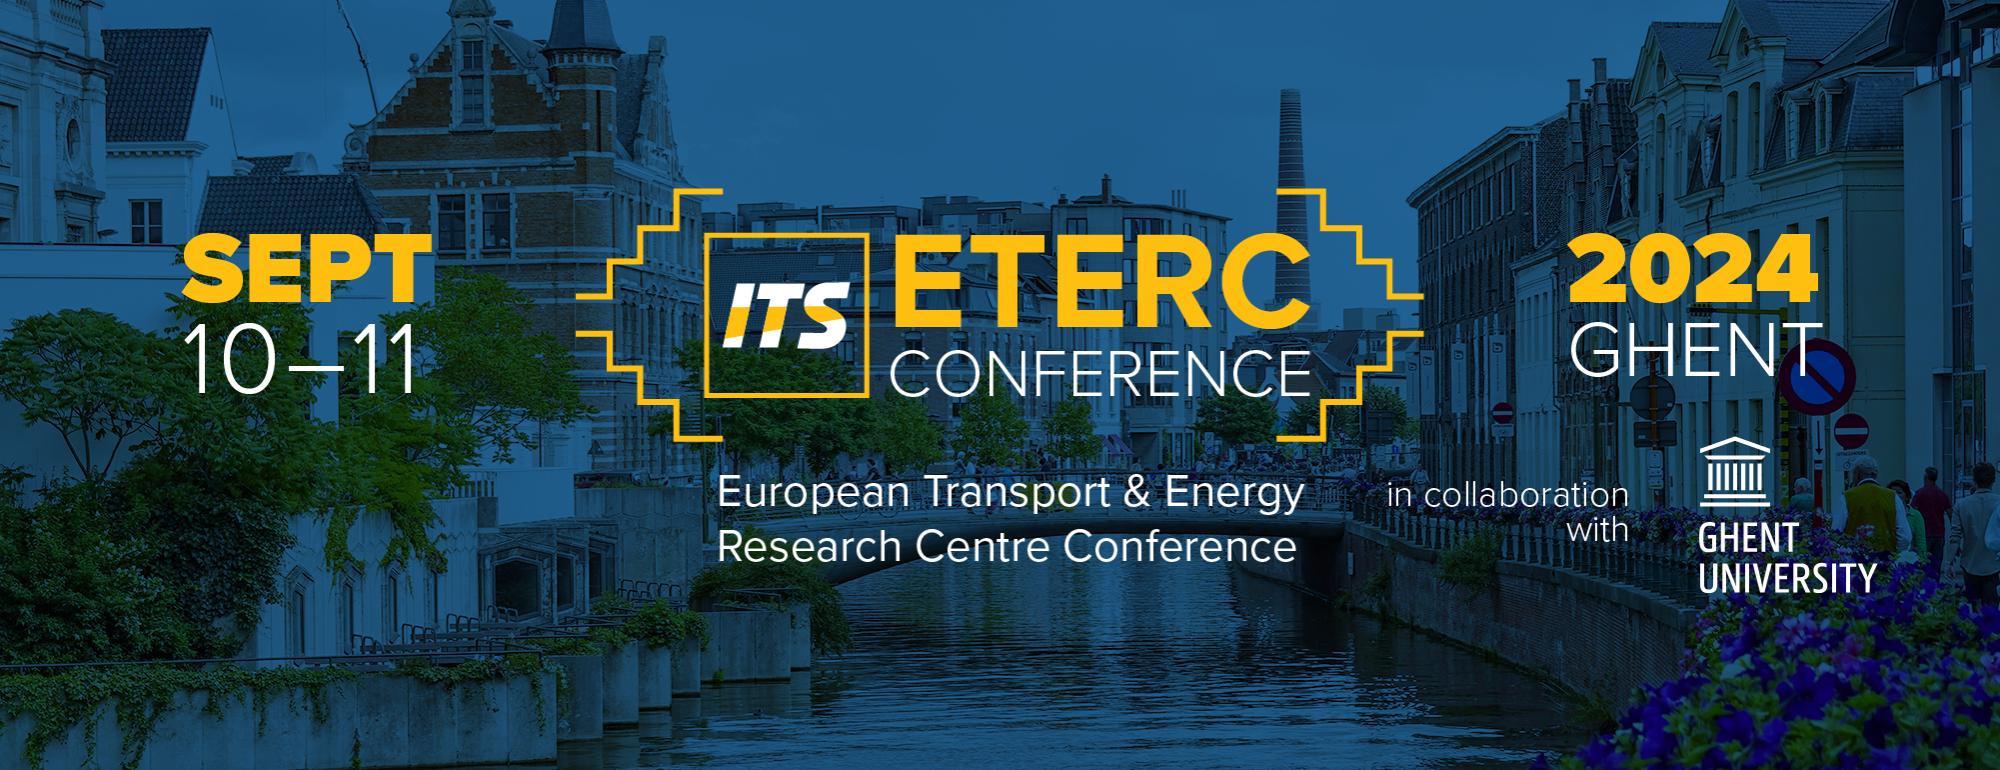 ETERC Conference in Ghent Belgium Sept 10-11 2024